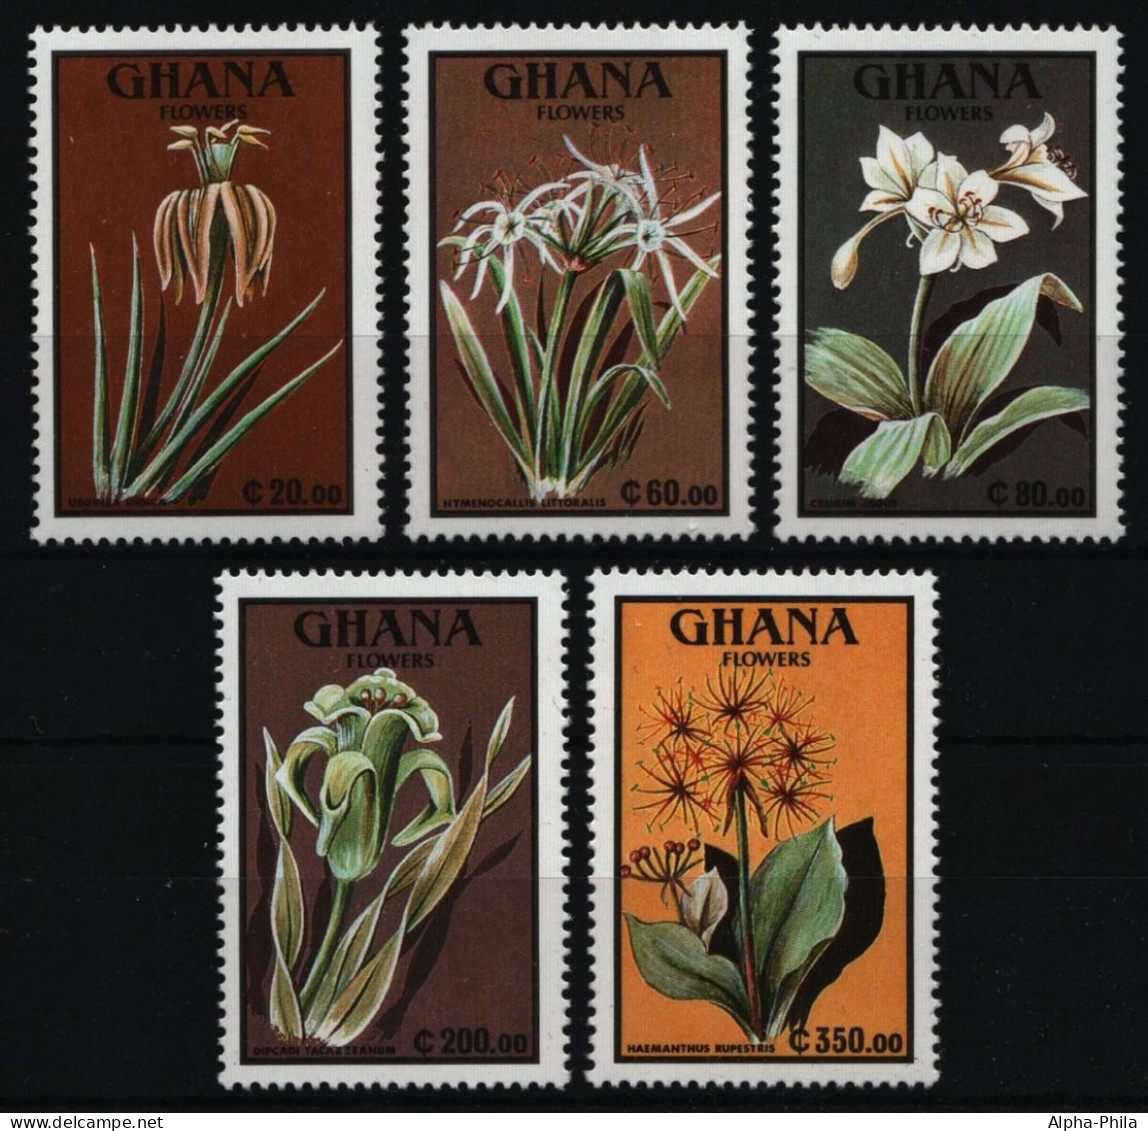 Ghana 1991 - Mi-Nr. 1490-1494 ** - MNH - Blumen / Flowers - Ghana (1957-...)